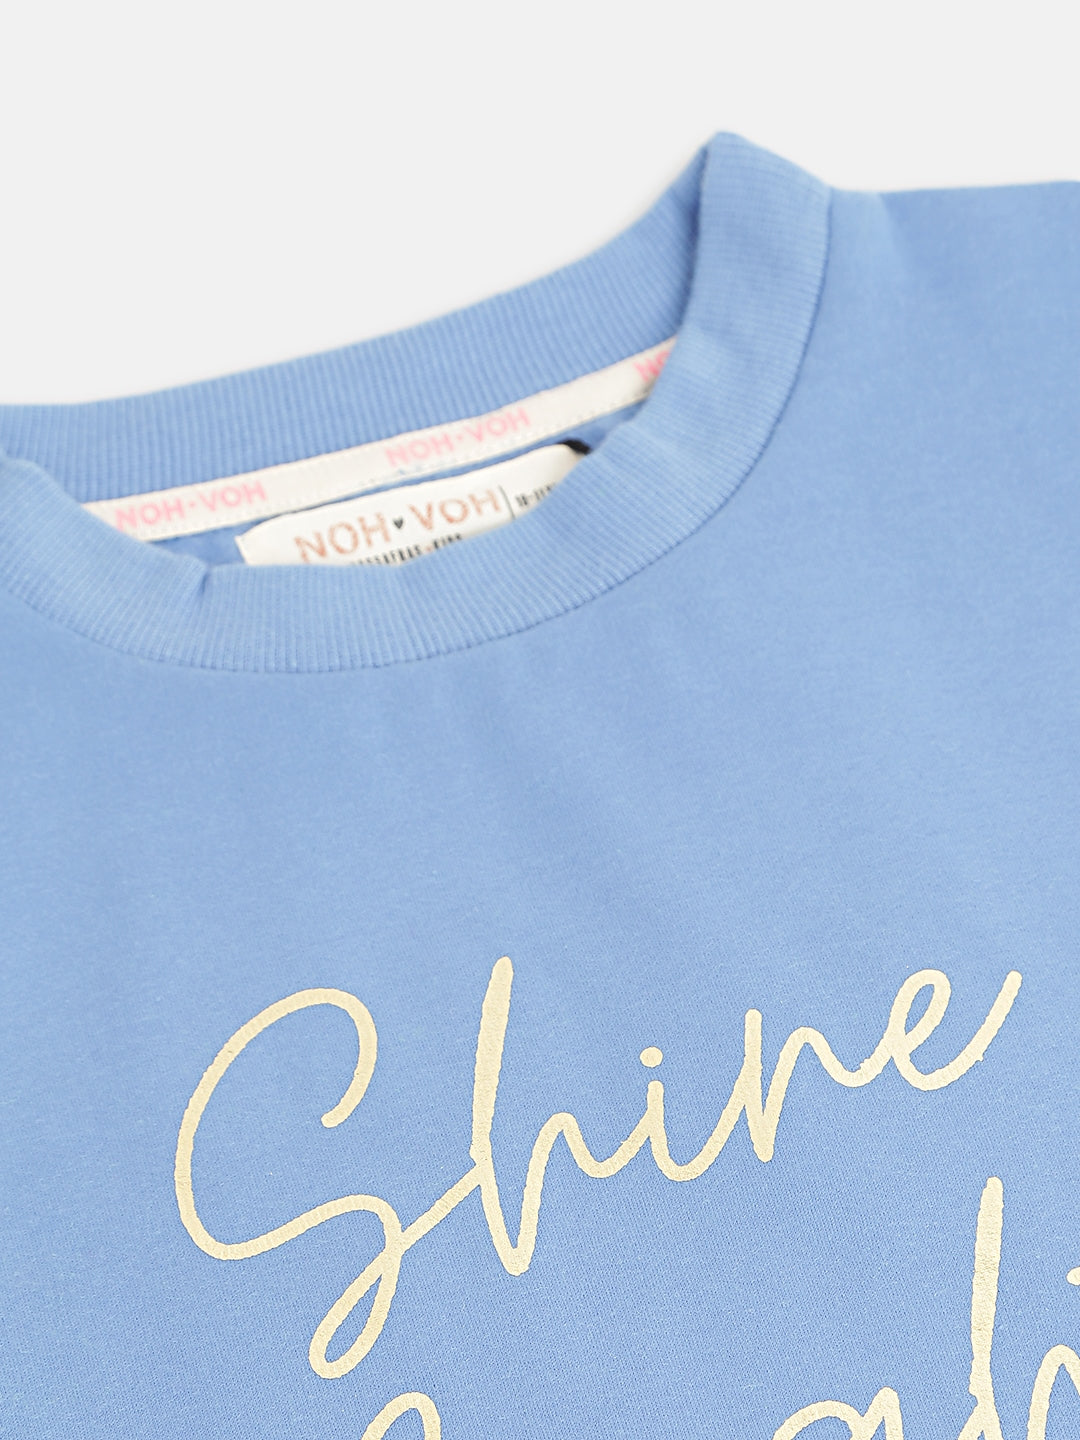 Girls Blue SHINE BRIGHT Foil Print Crop Sweatshirt